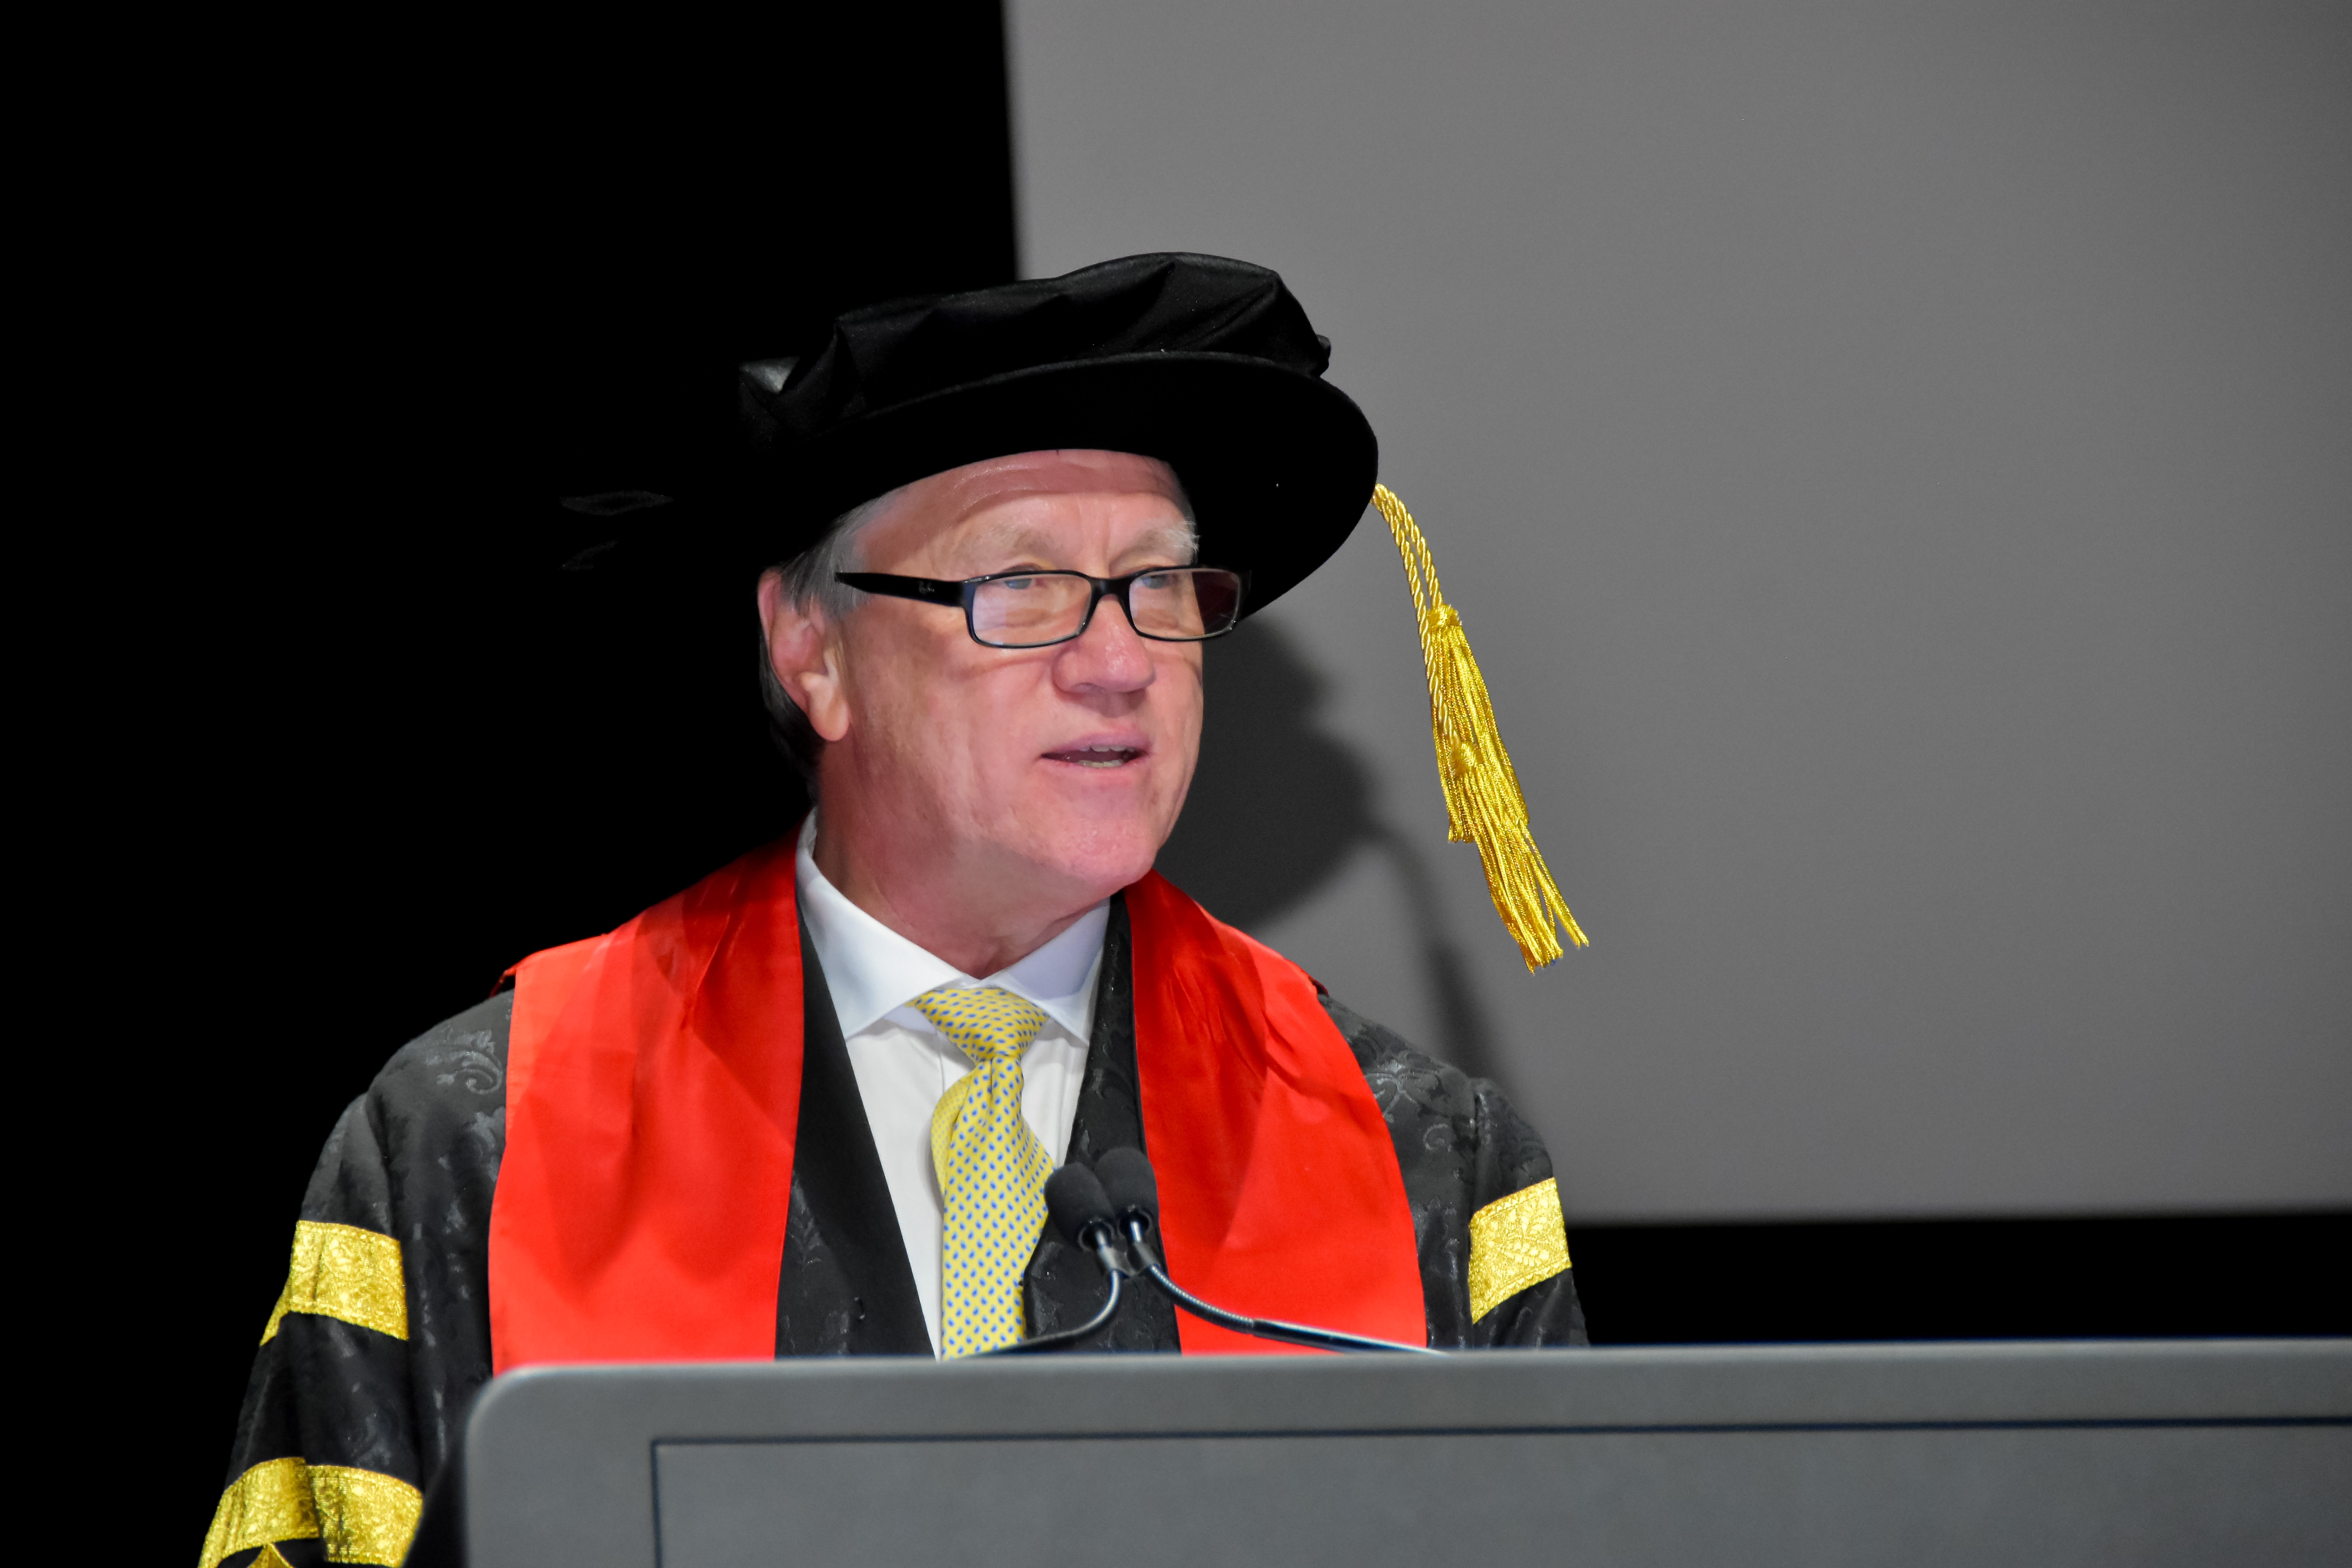 chancellor standing behind a podium in academic dress giving a speech